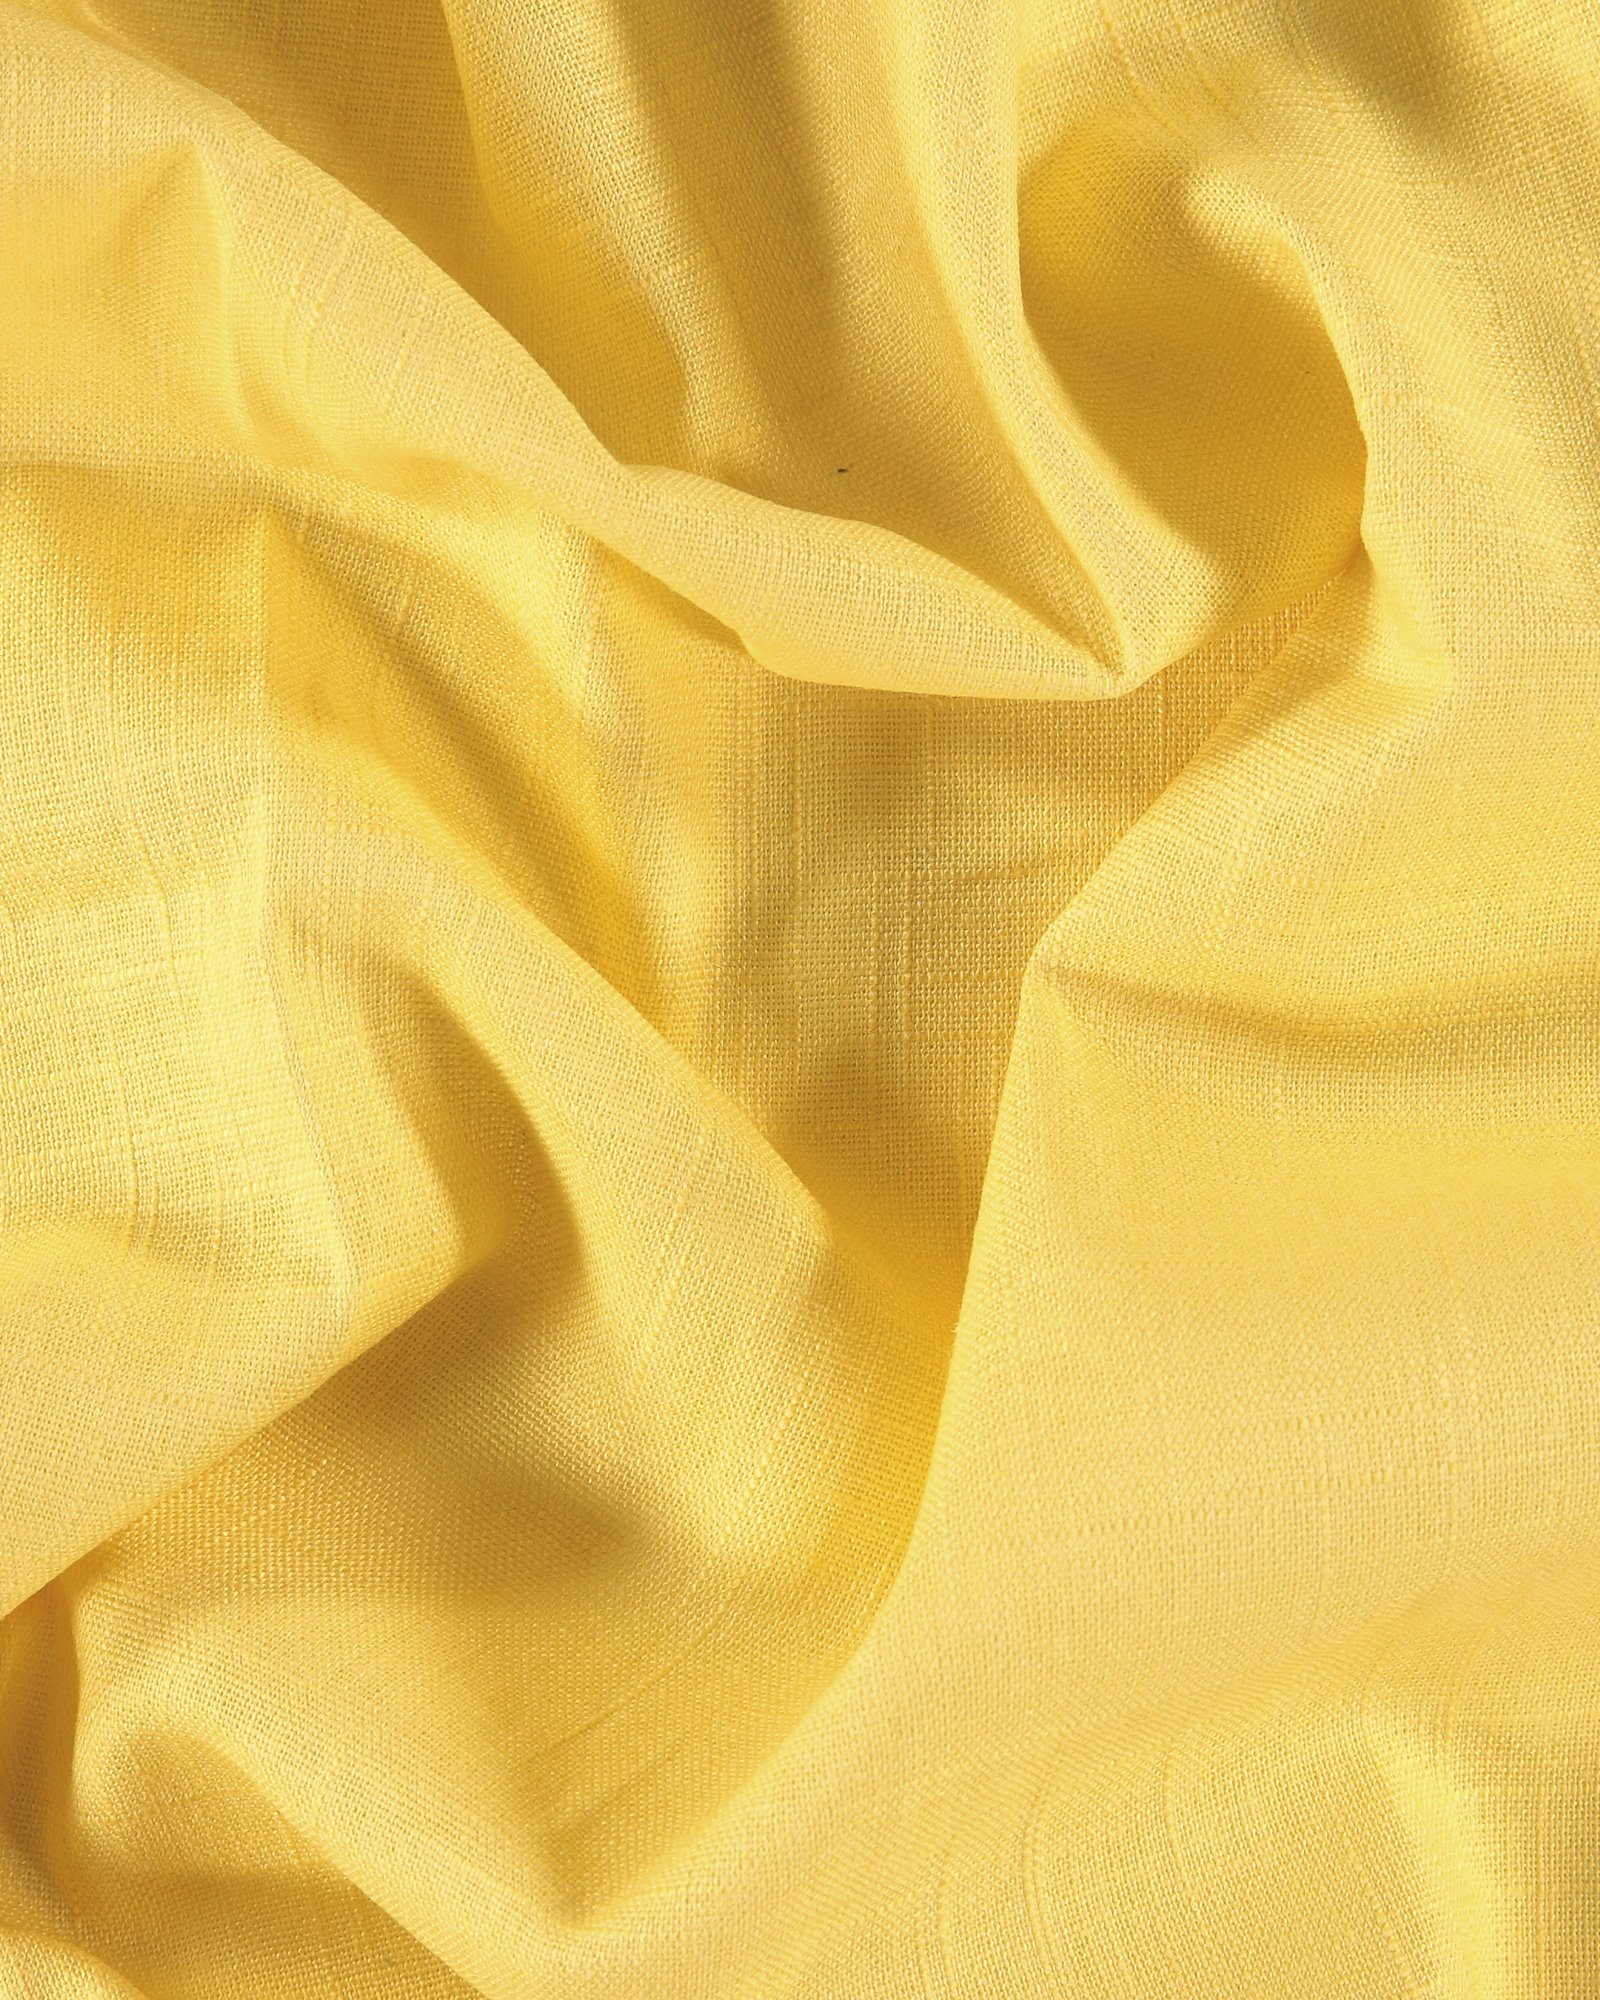 Coarse linen/viscose light yellow 852310_pack